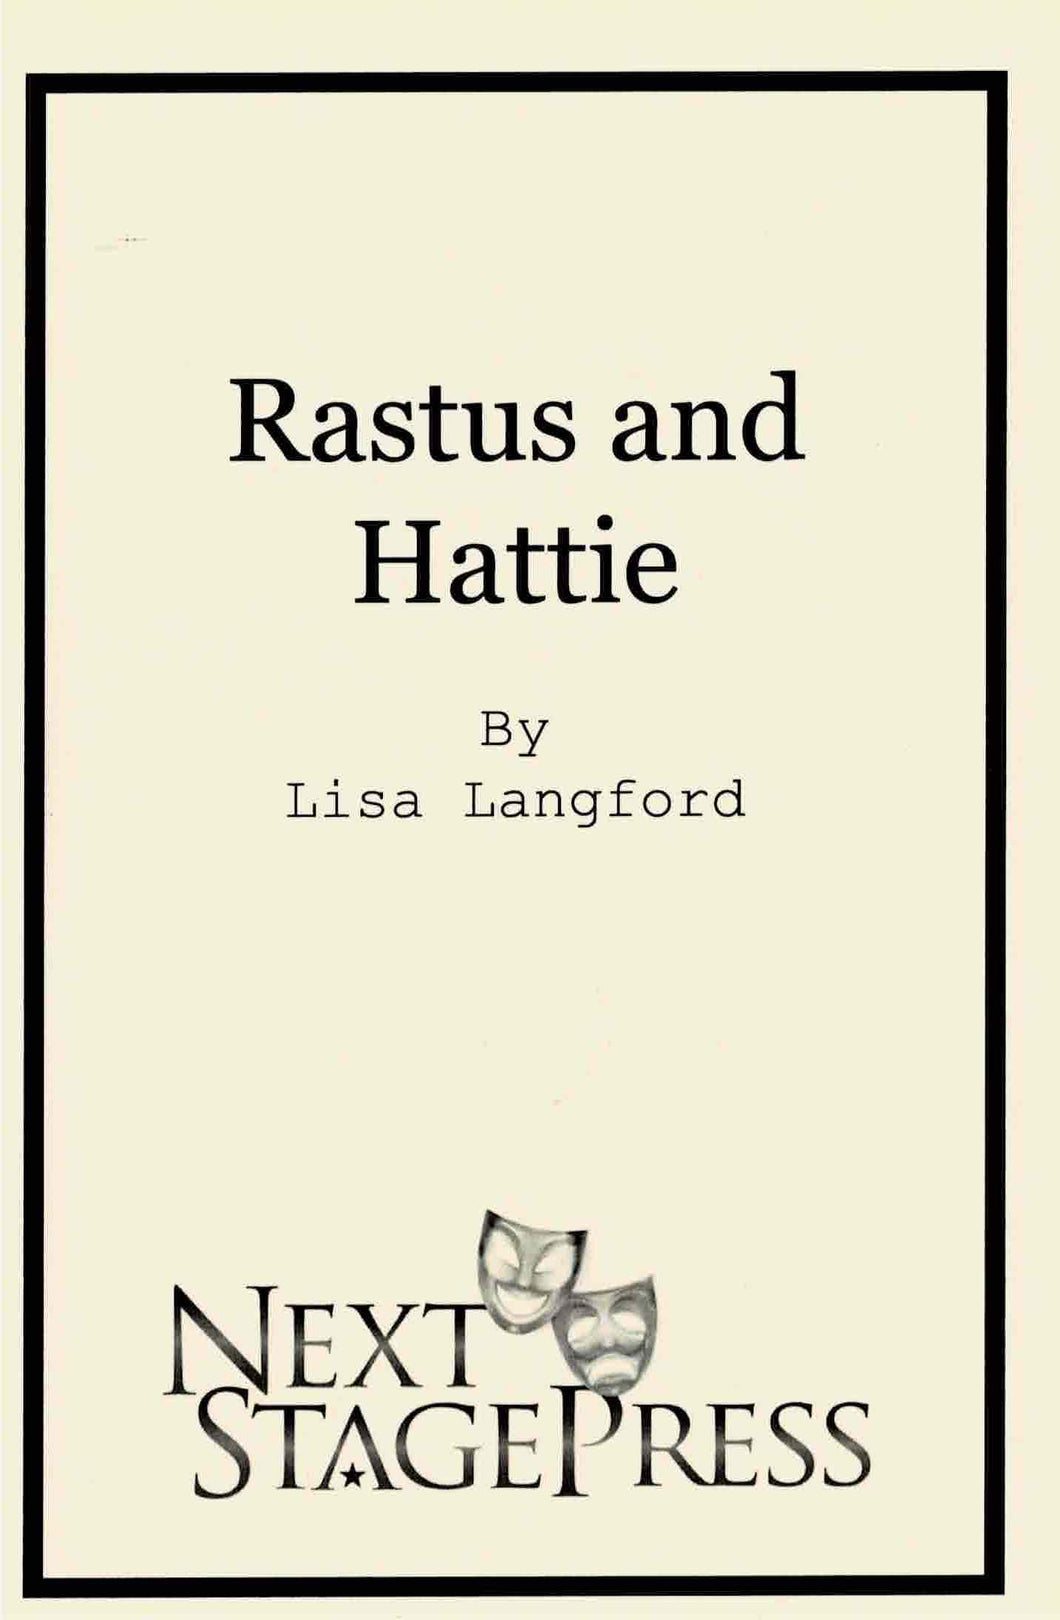 Rastus and Hattie